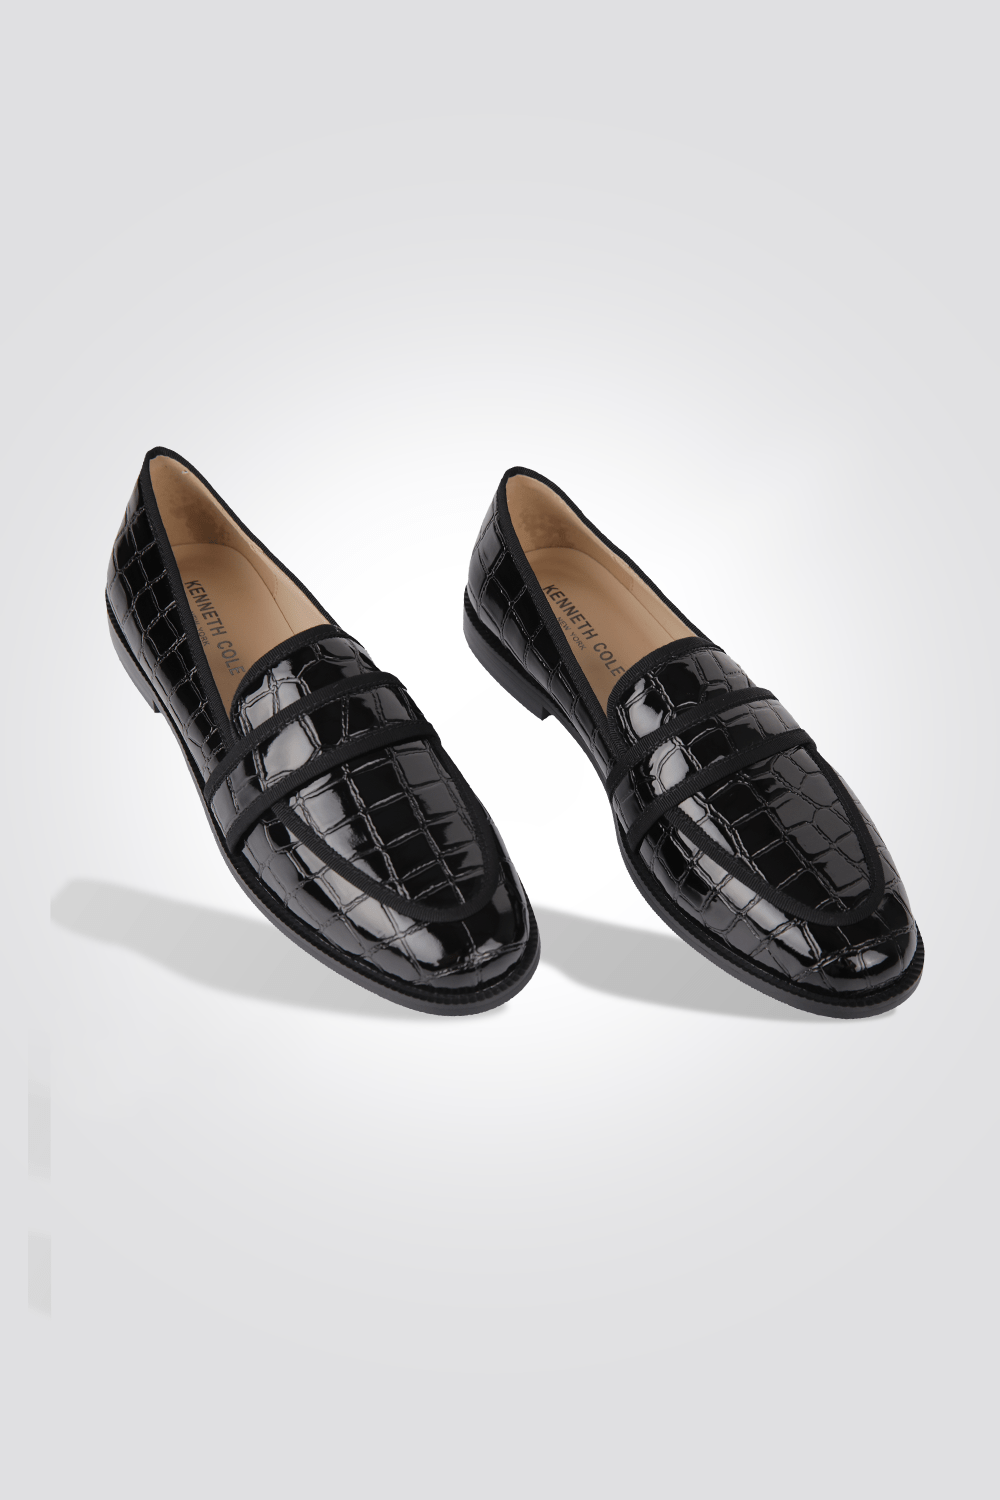 KENNETH COLE - נעלי מוקסין לנשים בצבע שחור - MASHBIR//365